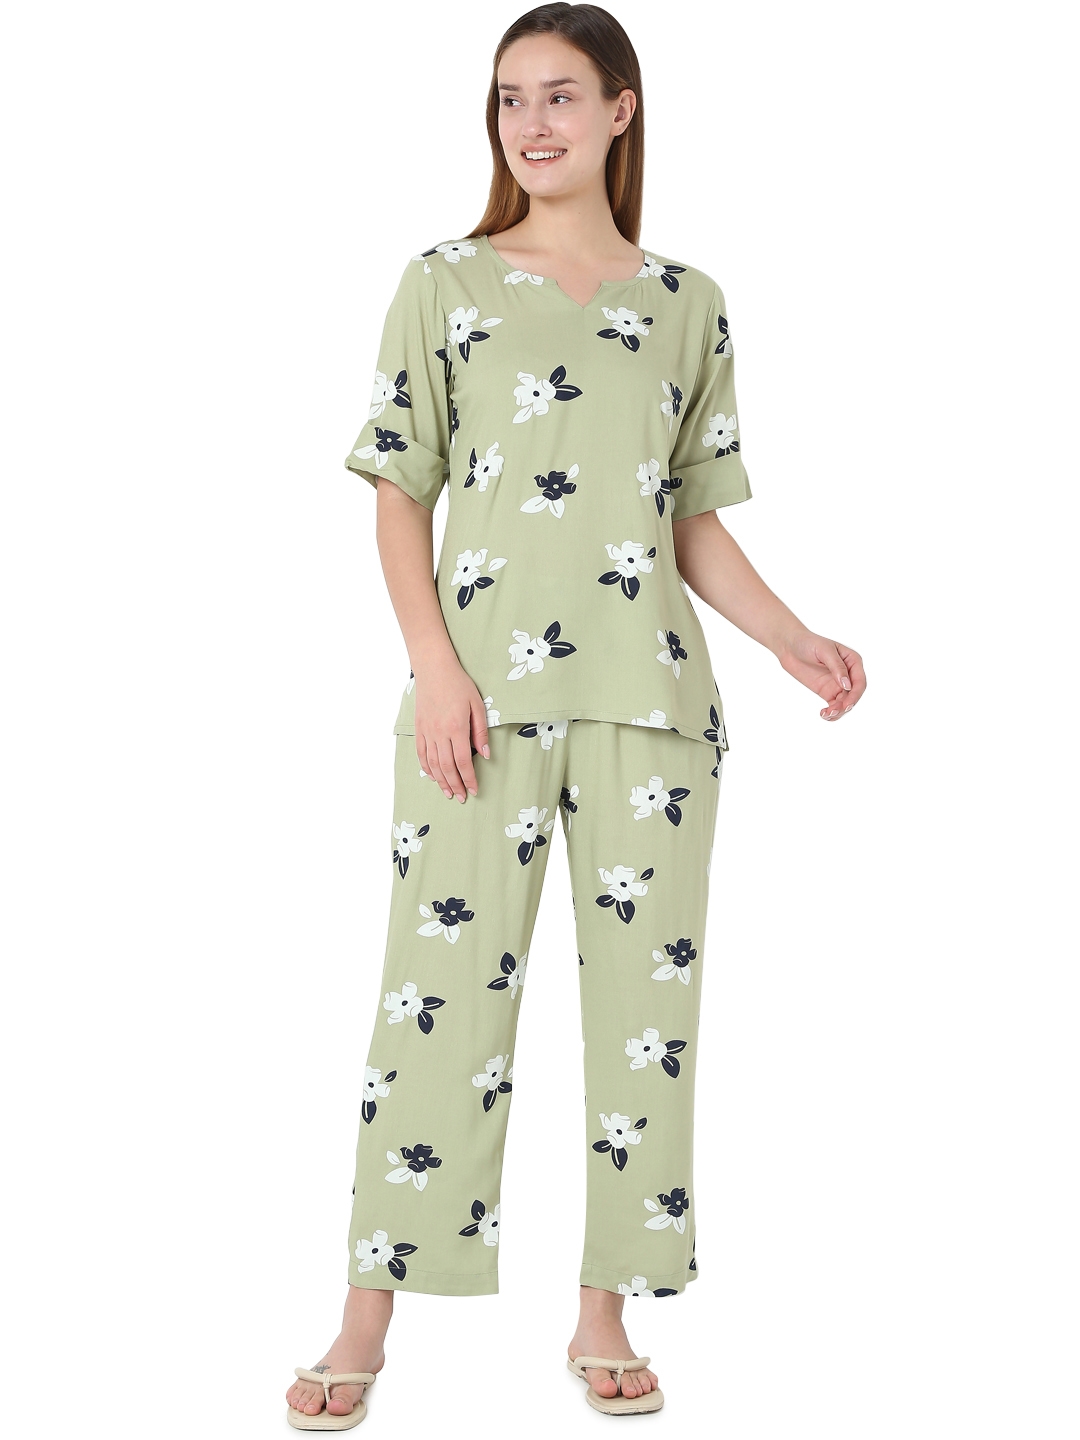 Smarty Pants | Smarty Pants women's cotton olive floral print night suit.  0